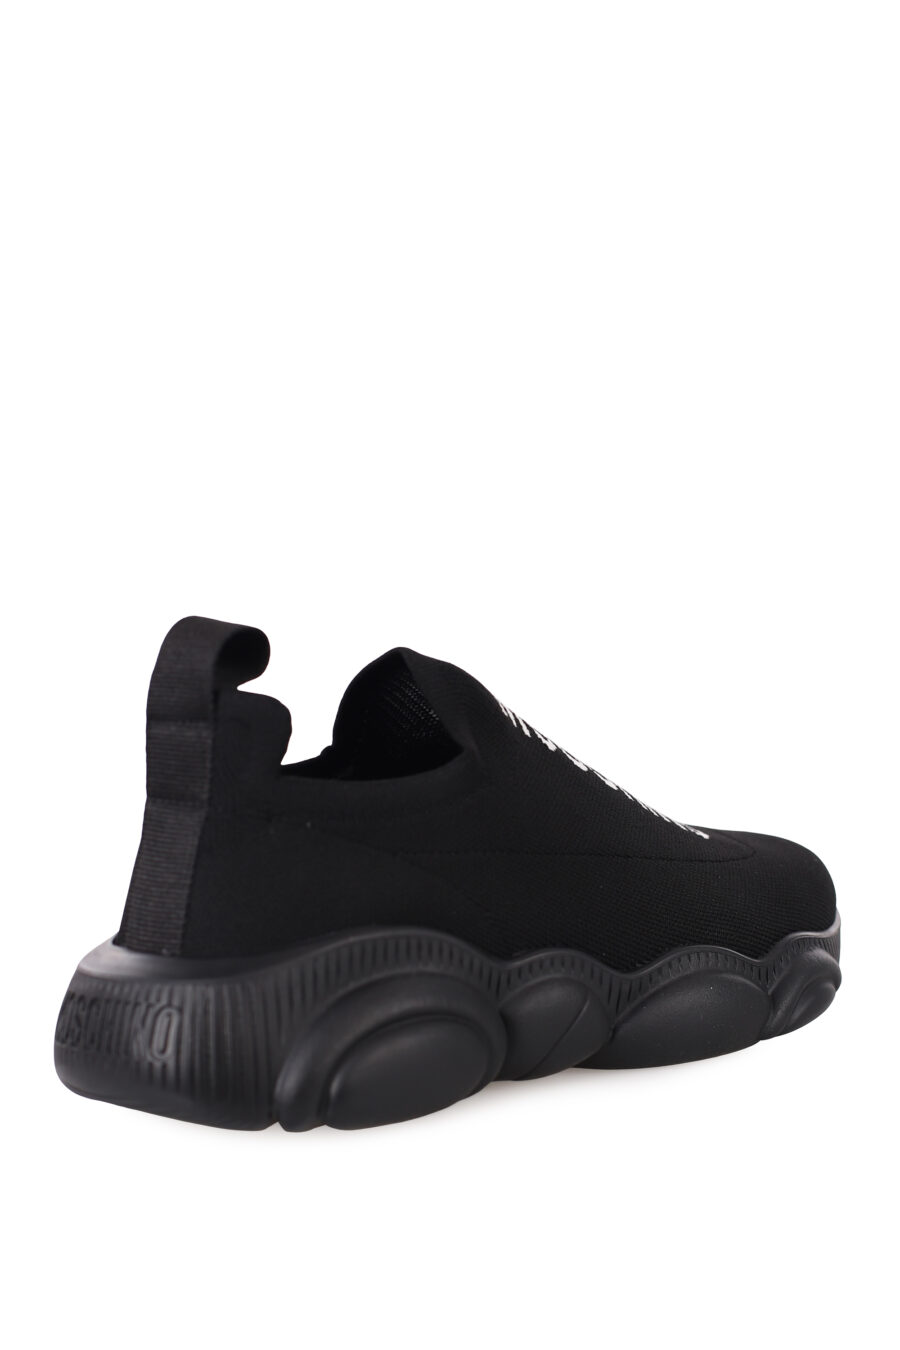 Zapatillas elásticas negras con logo blanco - IMG 0358